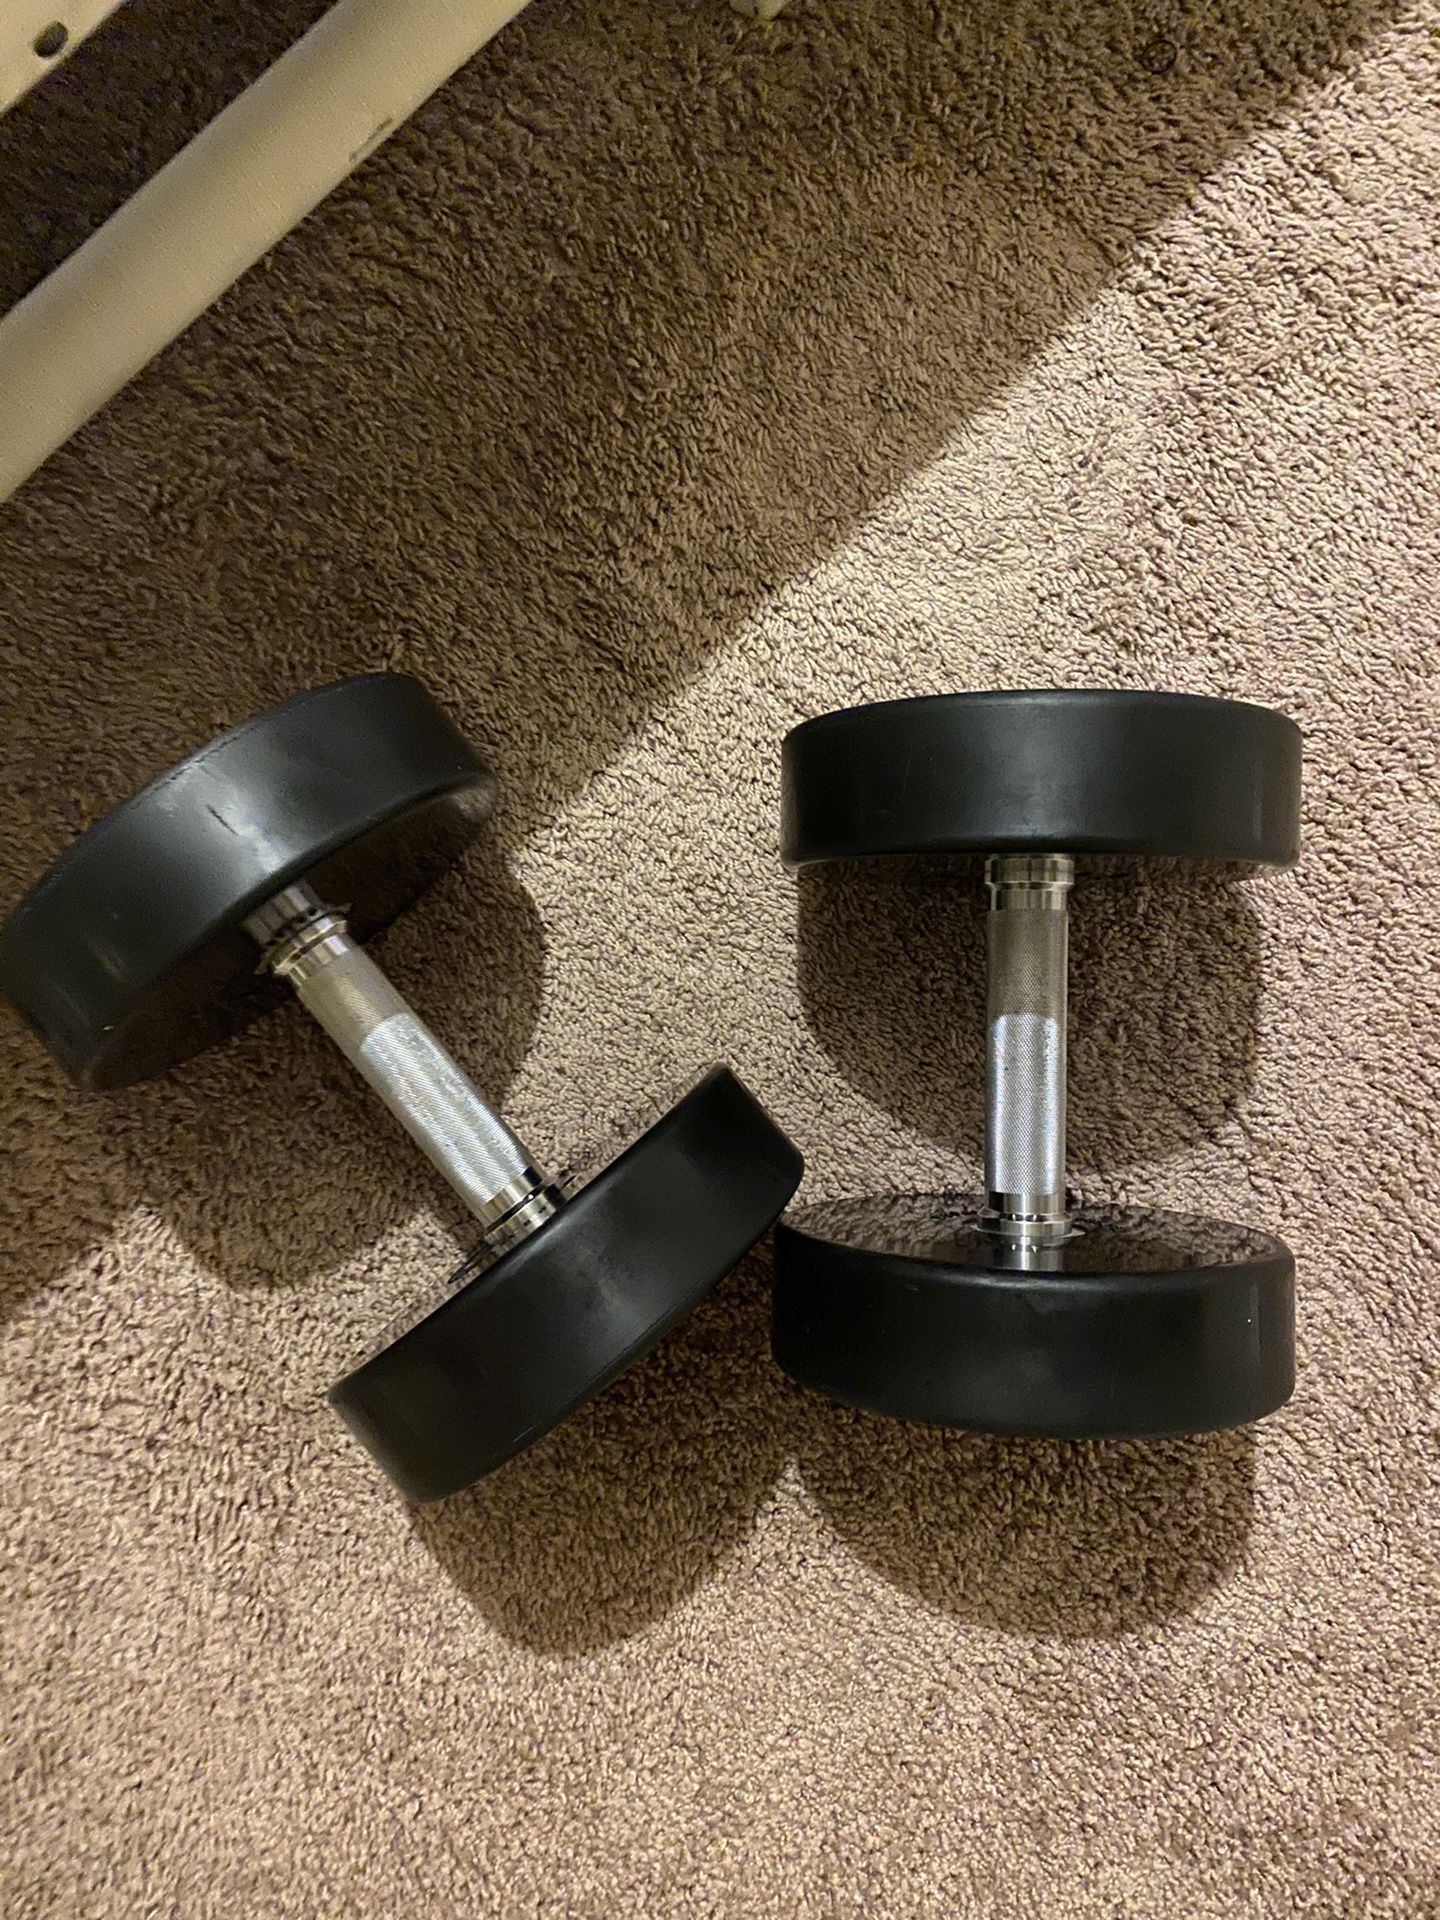 Pair of GP 45 lb weights